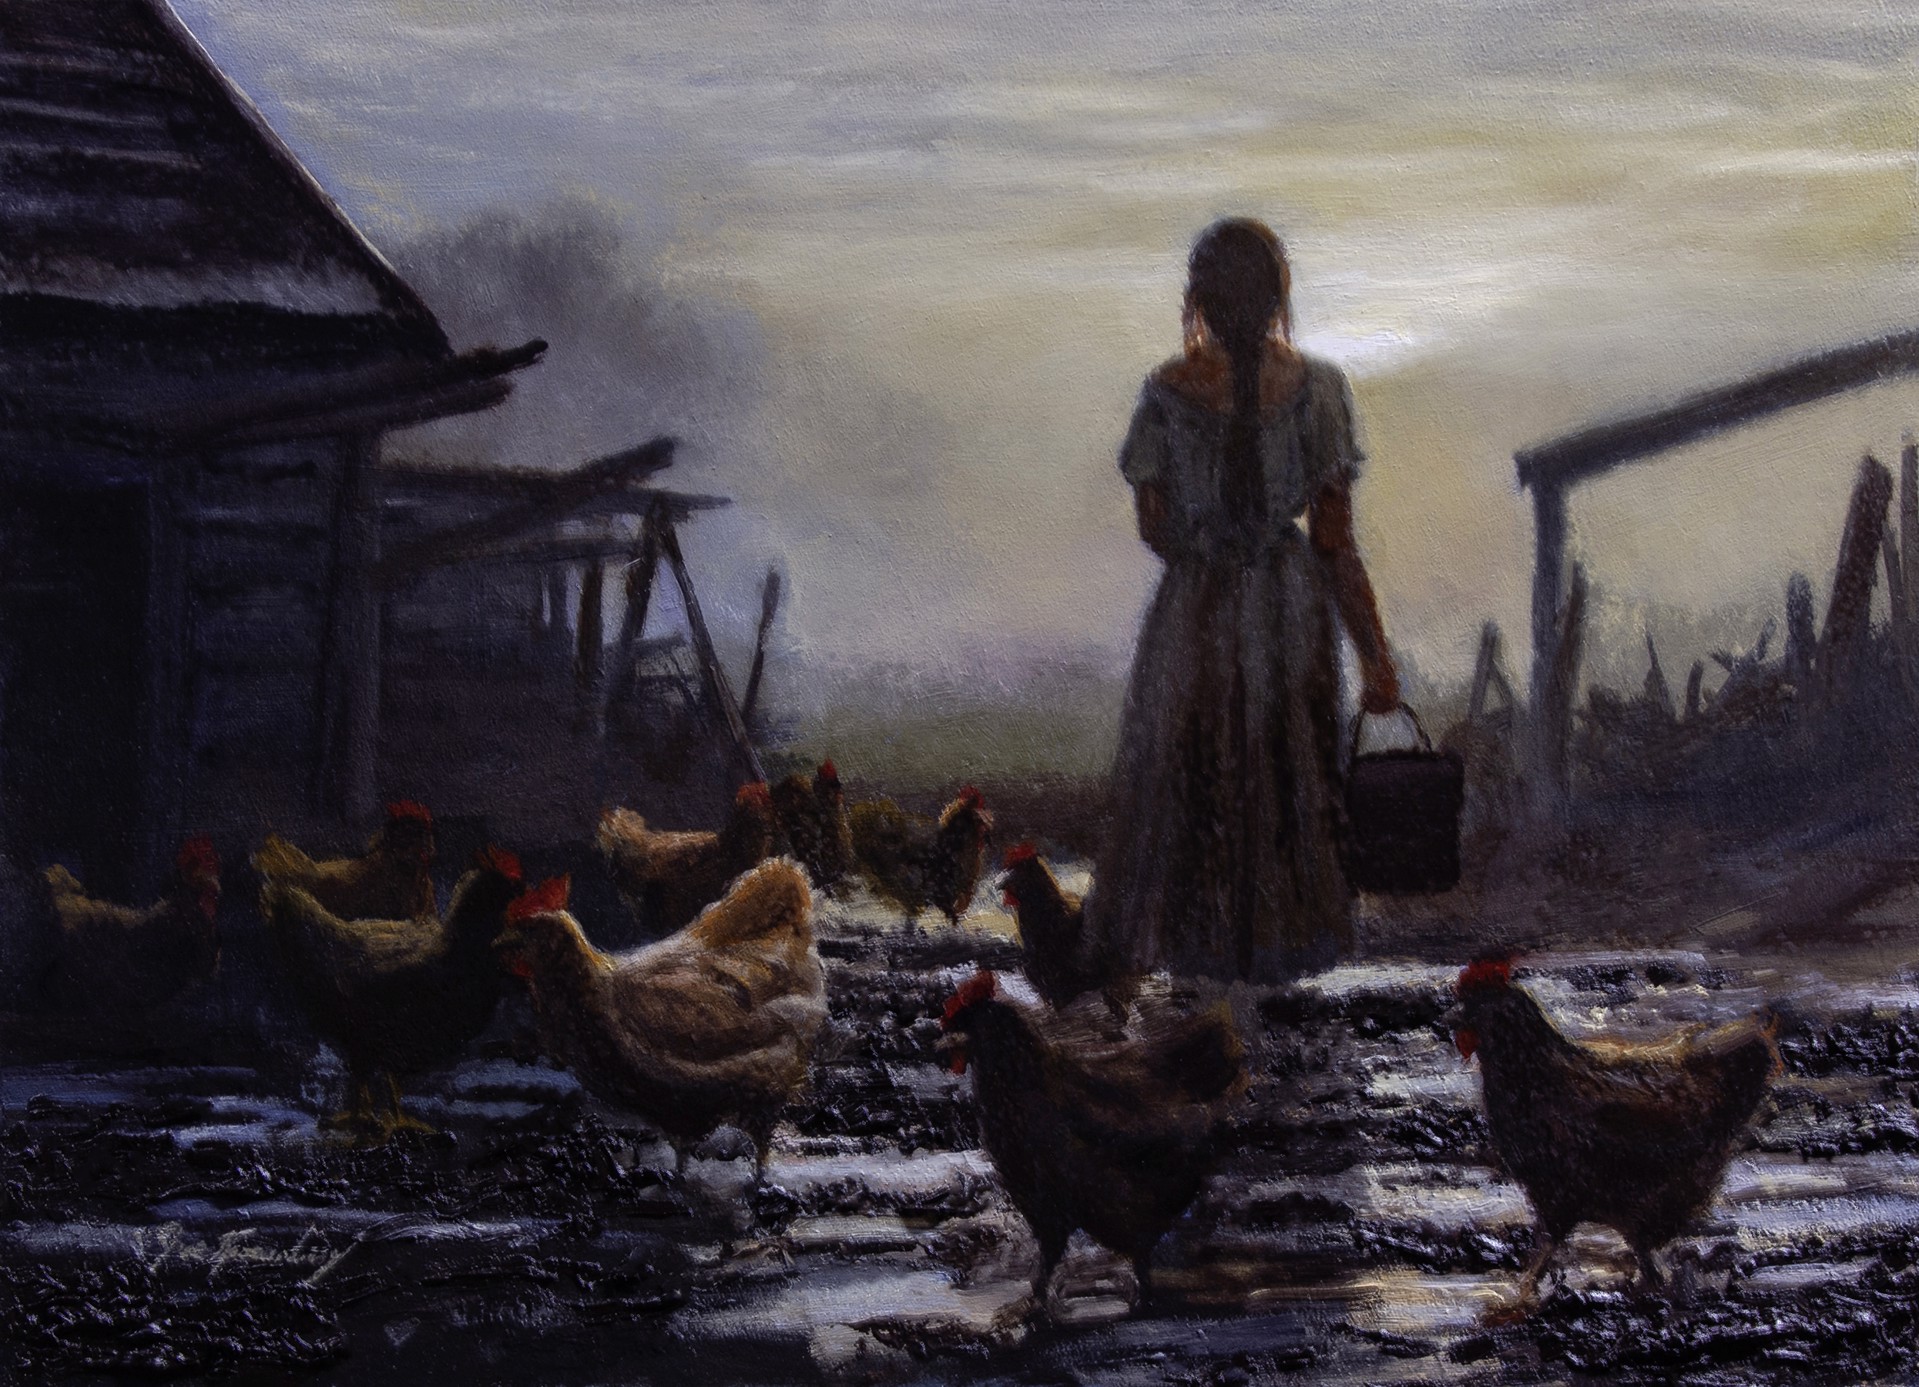 Tending Hens by Joe Kronenberg